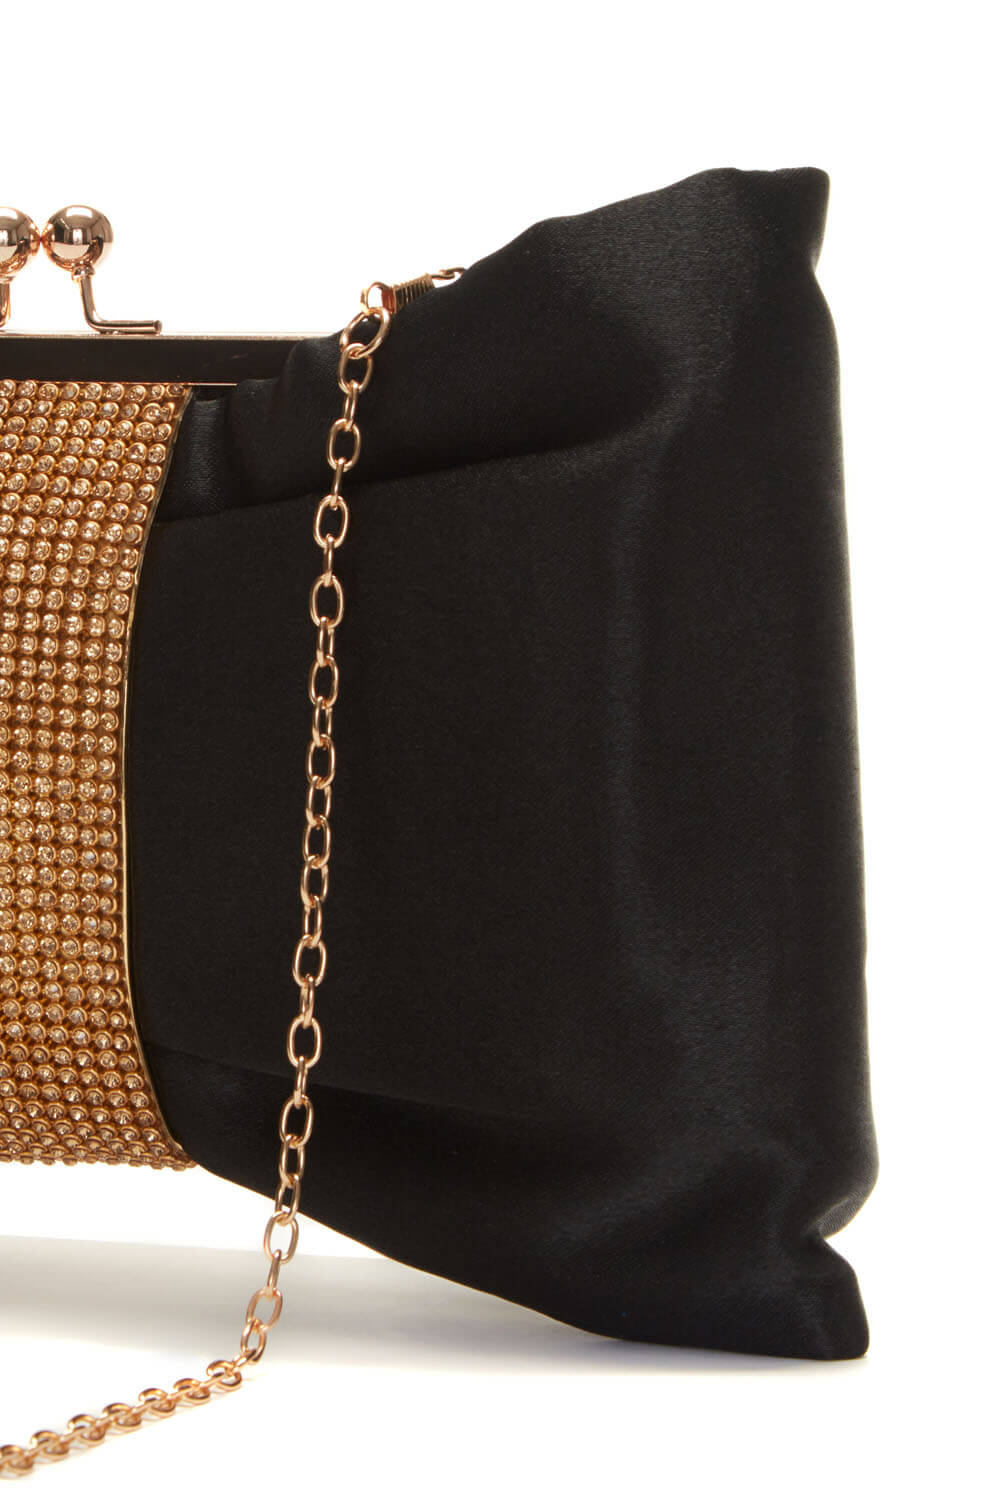 Black Diamante Embellished Bow Clutch Bag, Image 4 of 4